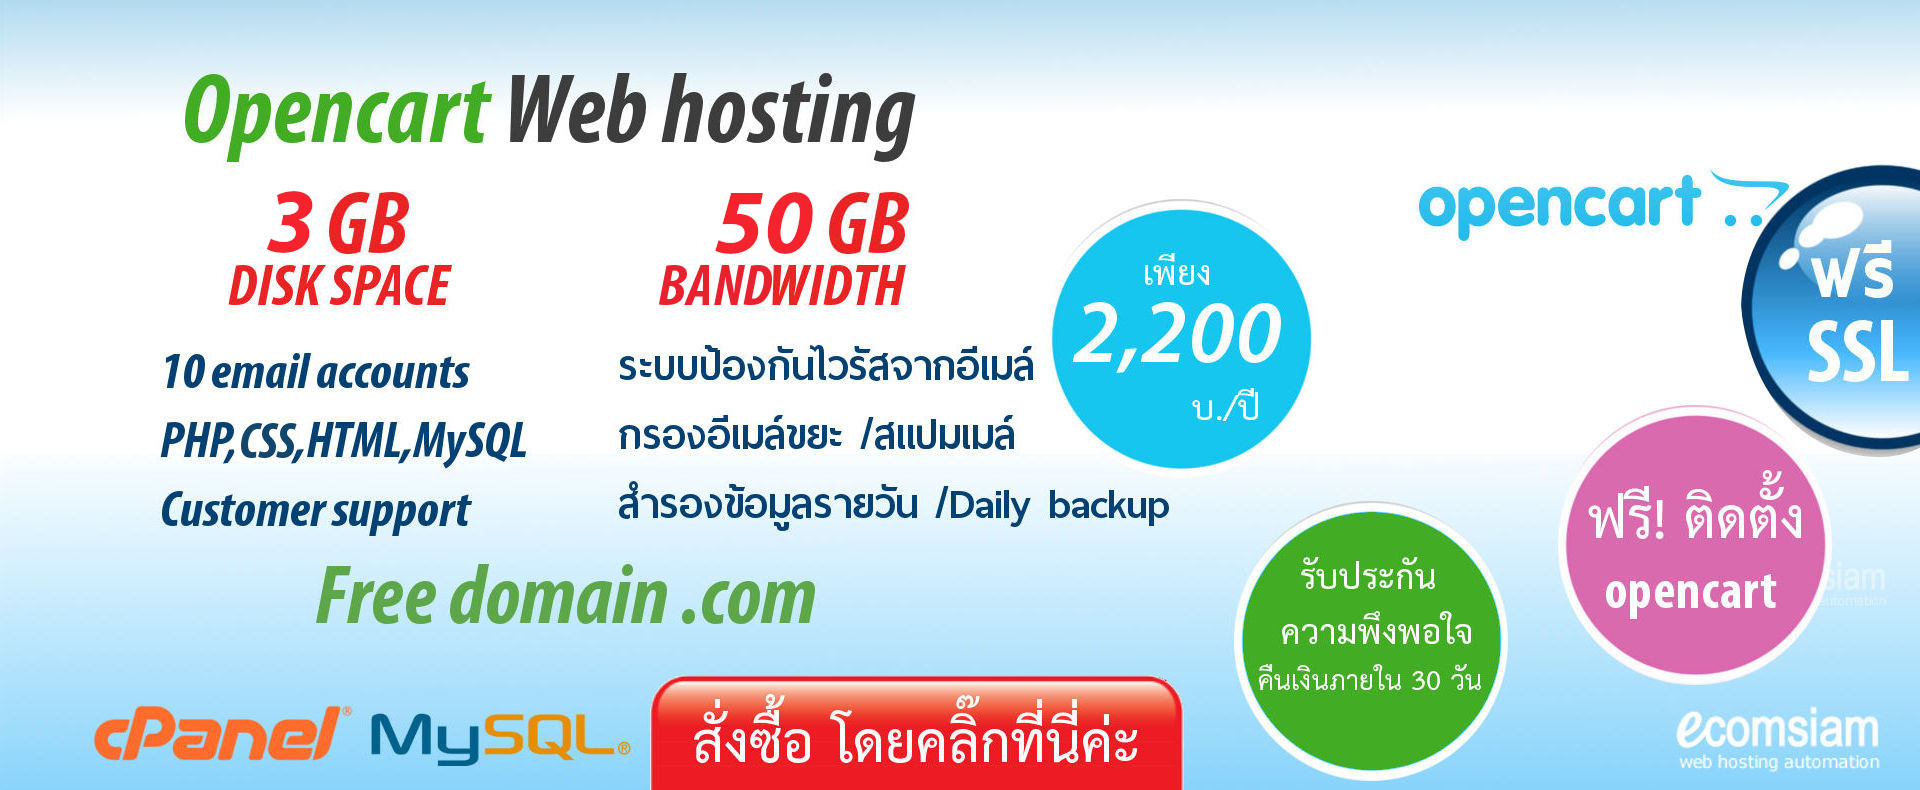 webhosting.com.co.th web hosting แนะนำ Opencart web hosting thailand เพียง 2,200 บ./ปี เว็บโฮสติ้งไทย ฟรี โดเมน ฟรี SSL ฟรีติดตั้ง แนะนำเว็บโฮสติ้ง บริการลูกค้า  Support ดูแลดี โดย webhosting.com.co.th - opencart web hosting thailand free domain